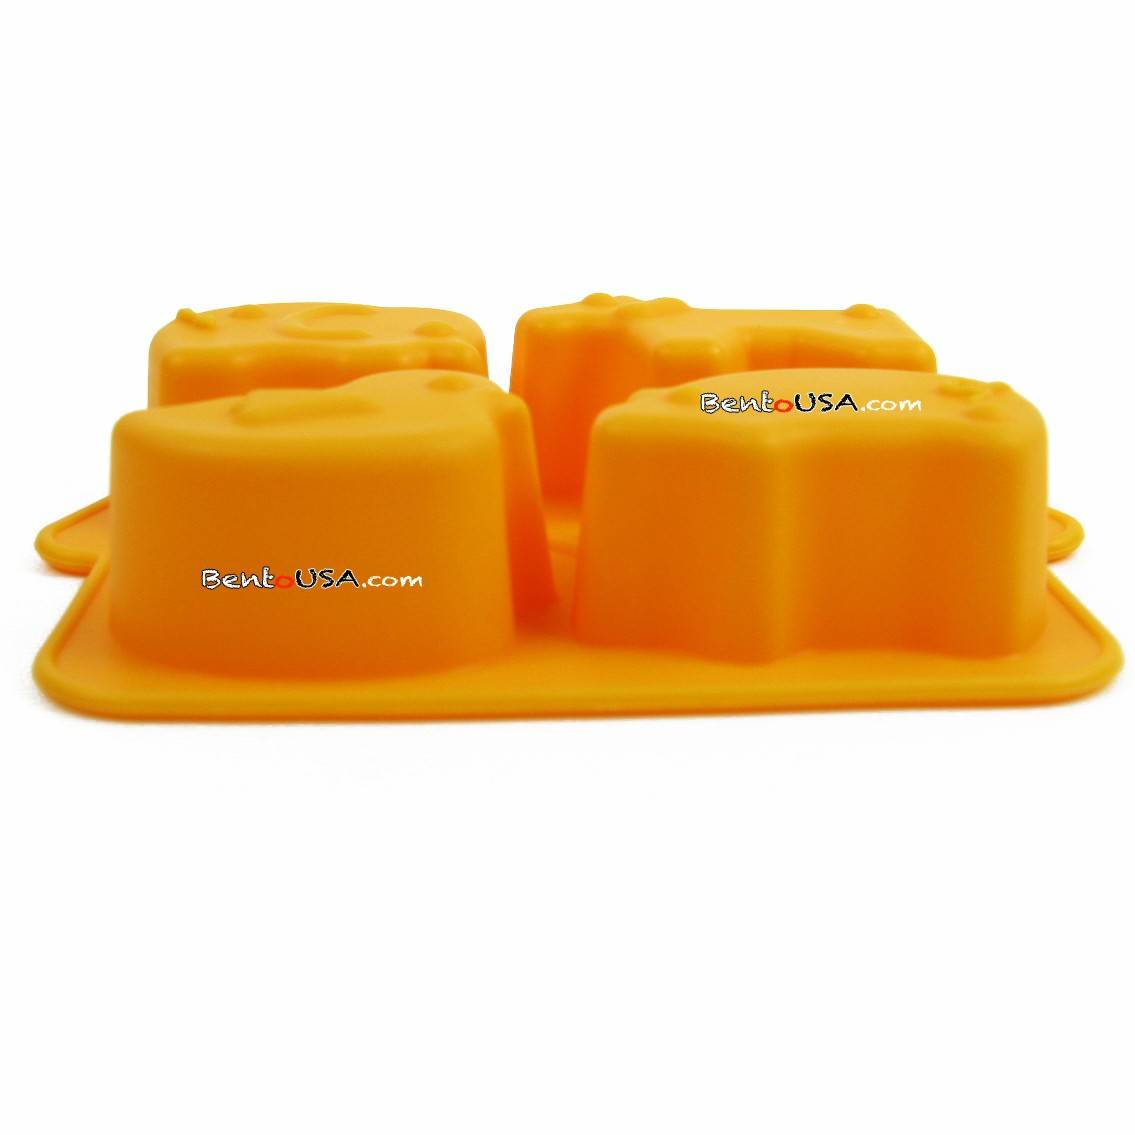 https://www.bentousa.com/2239-3148/bento-silicone-mold-4-fun-animal-shapes-ice-tray-other-fun-molds-bento-usa.jpg